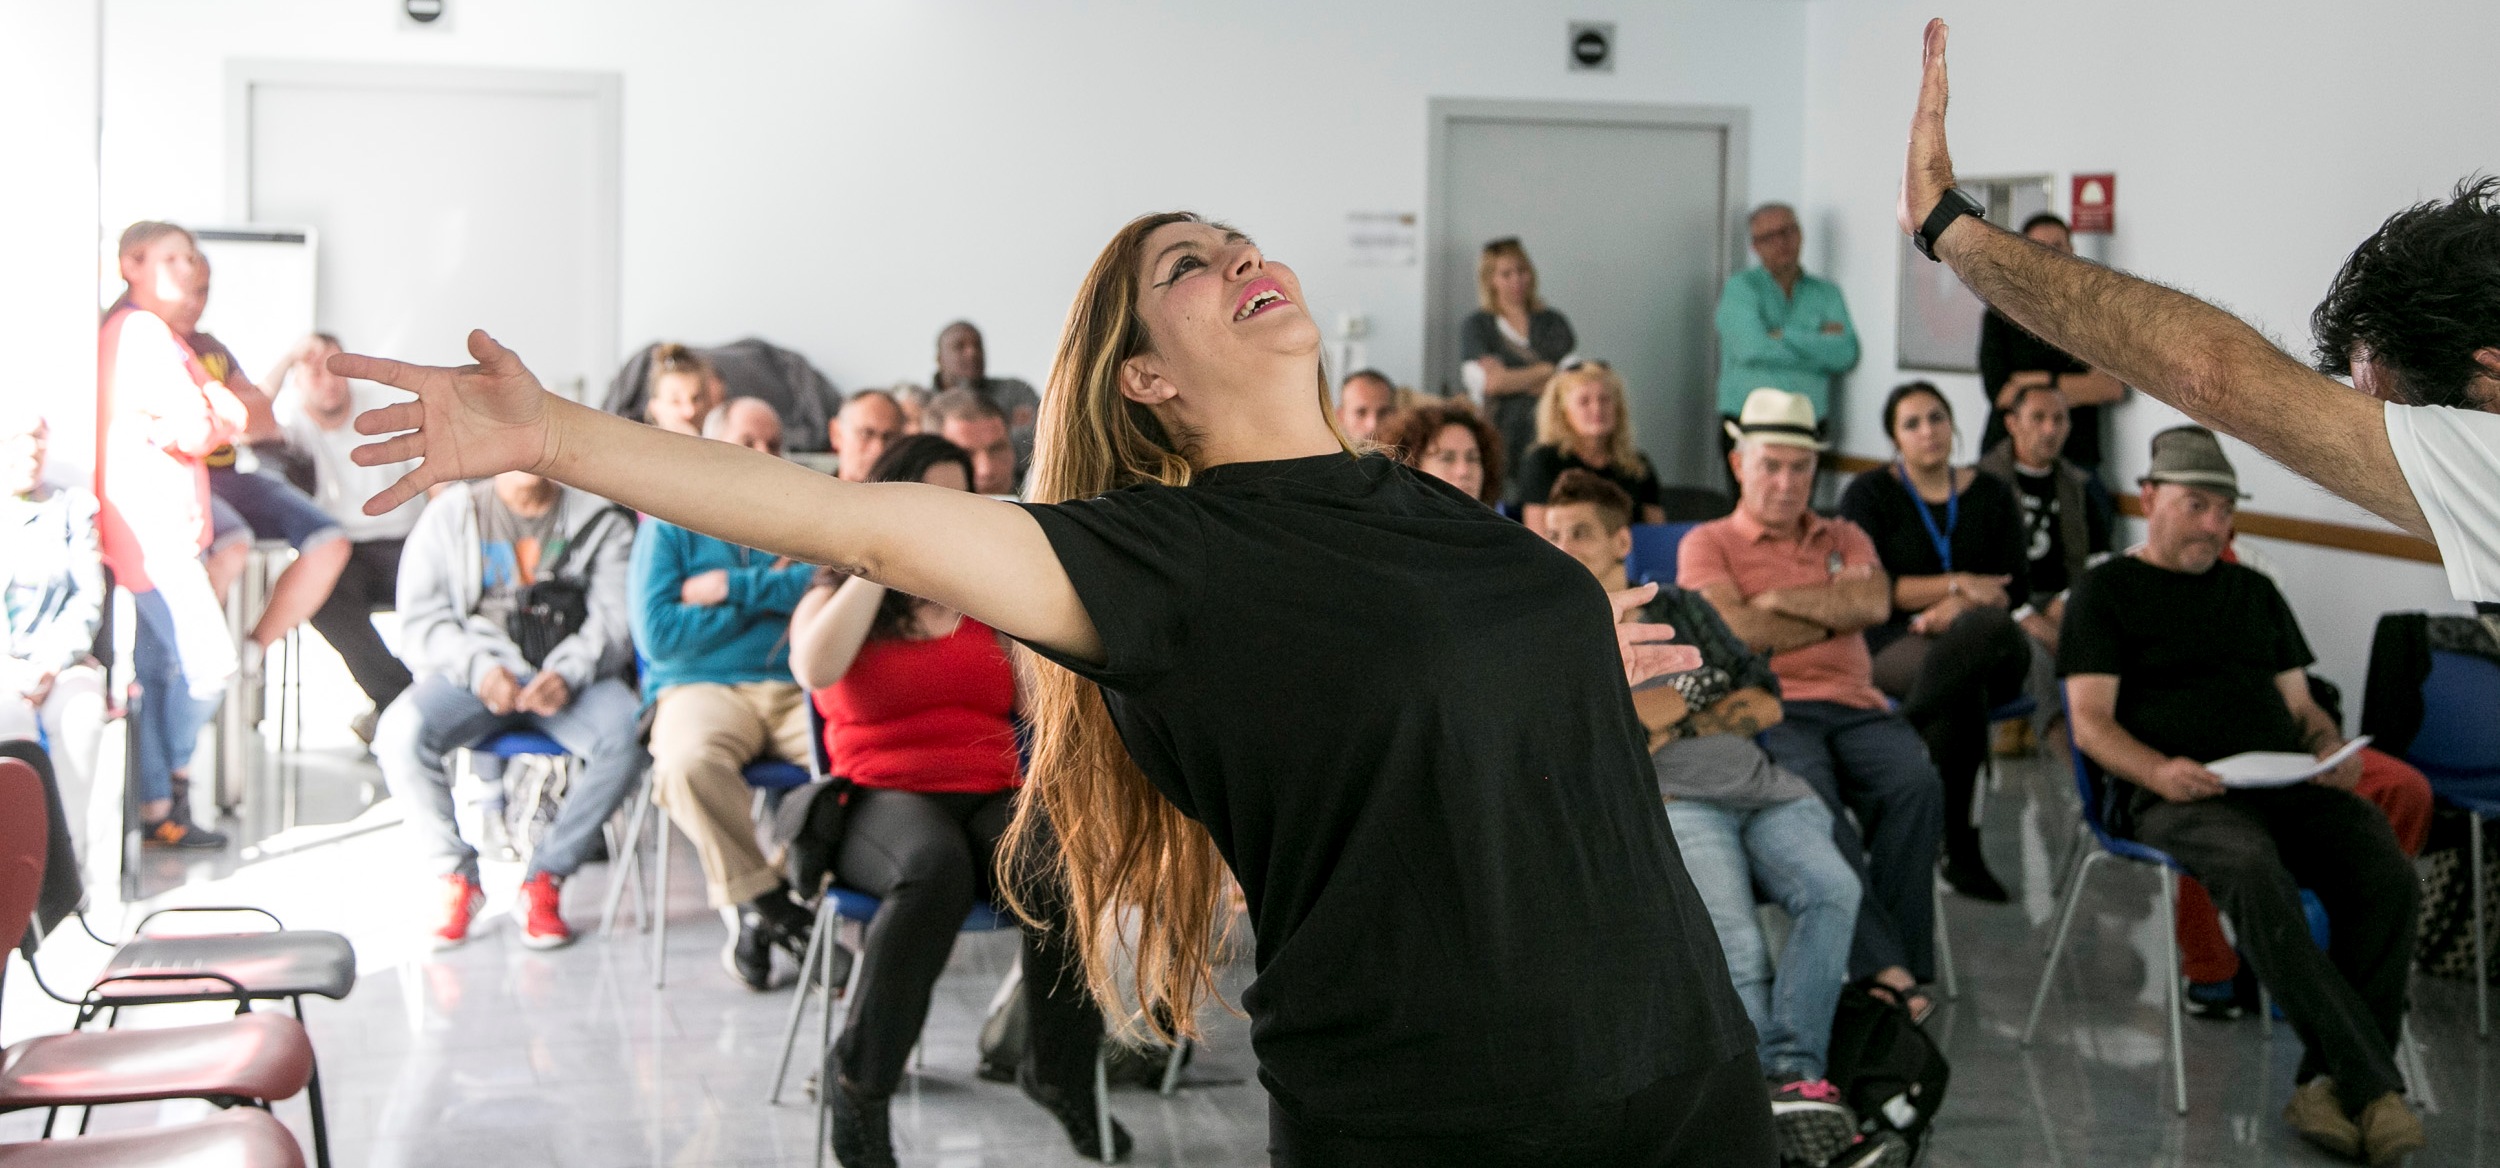 danza comunidad finaliza  talleres colectivo l albergue tenerife